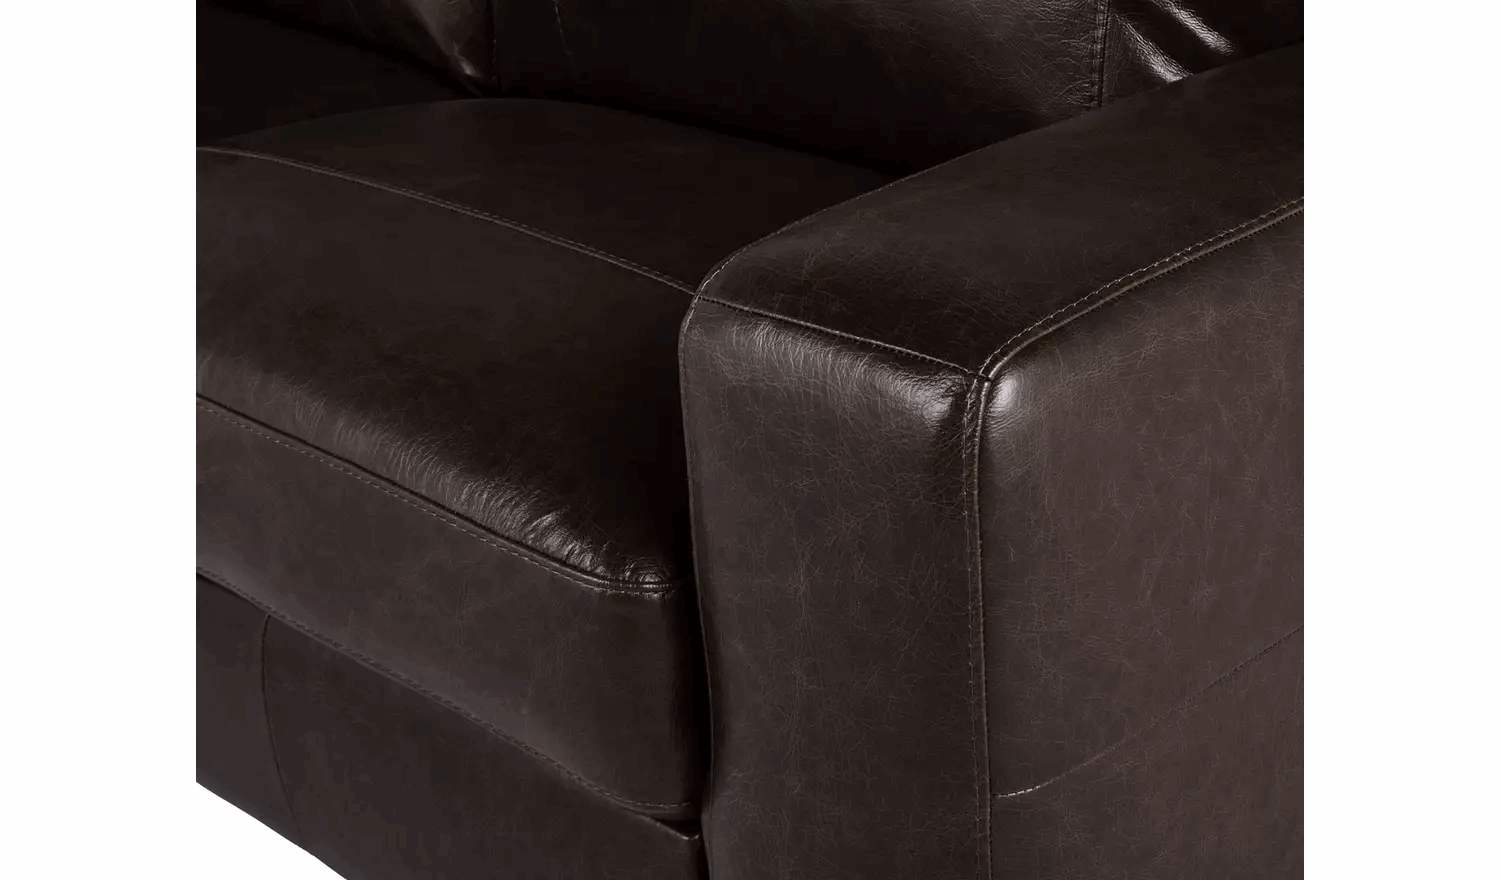 Habitat Salisbury 3 Seater Leather Sofa - Dark Brown(100% Leather)